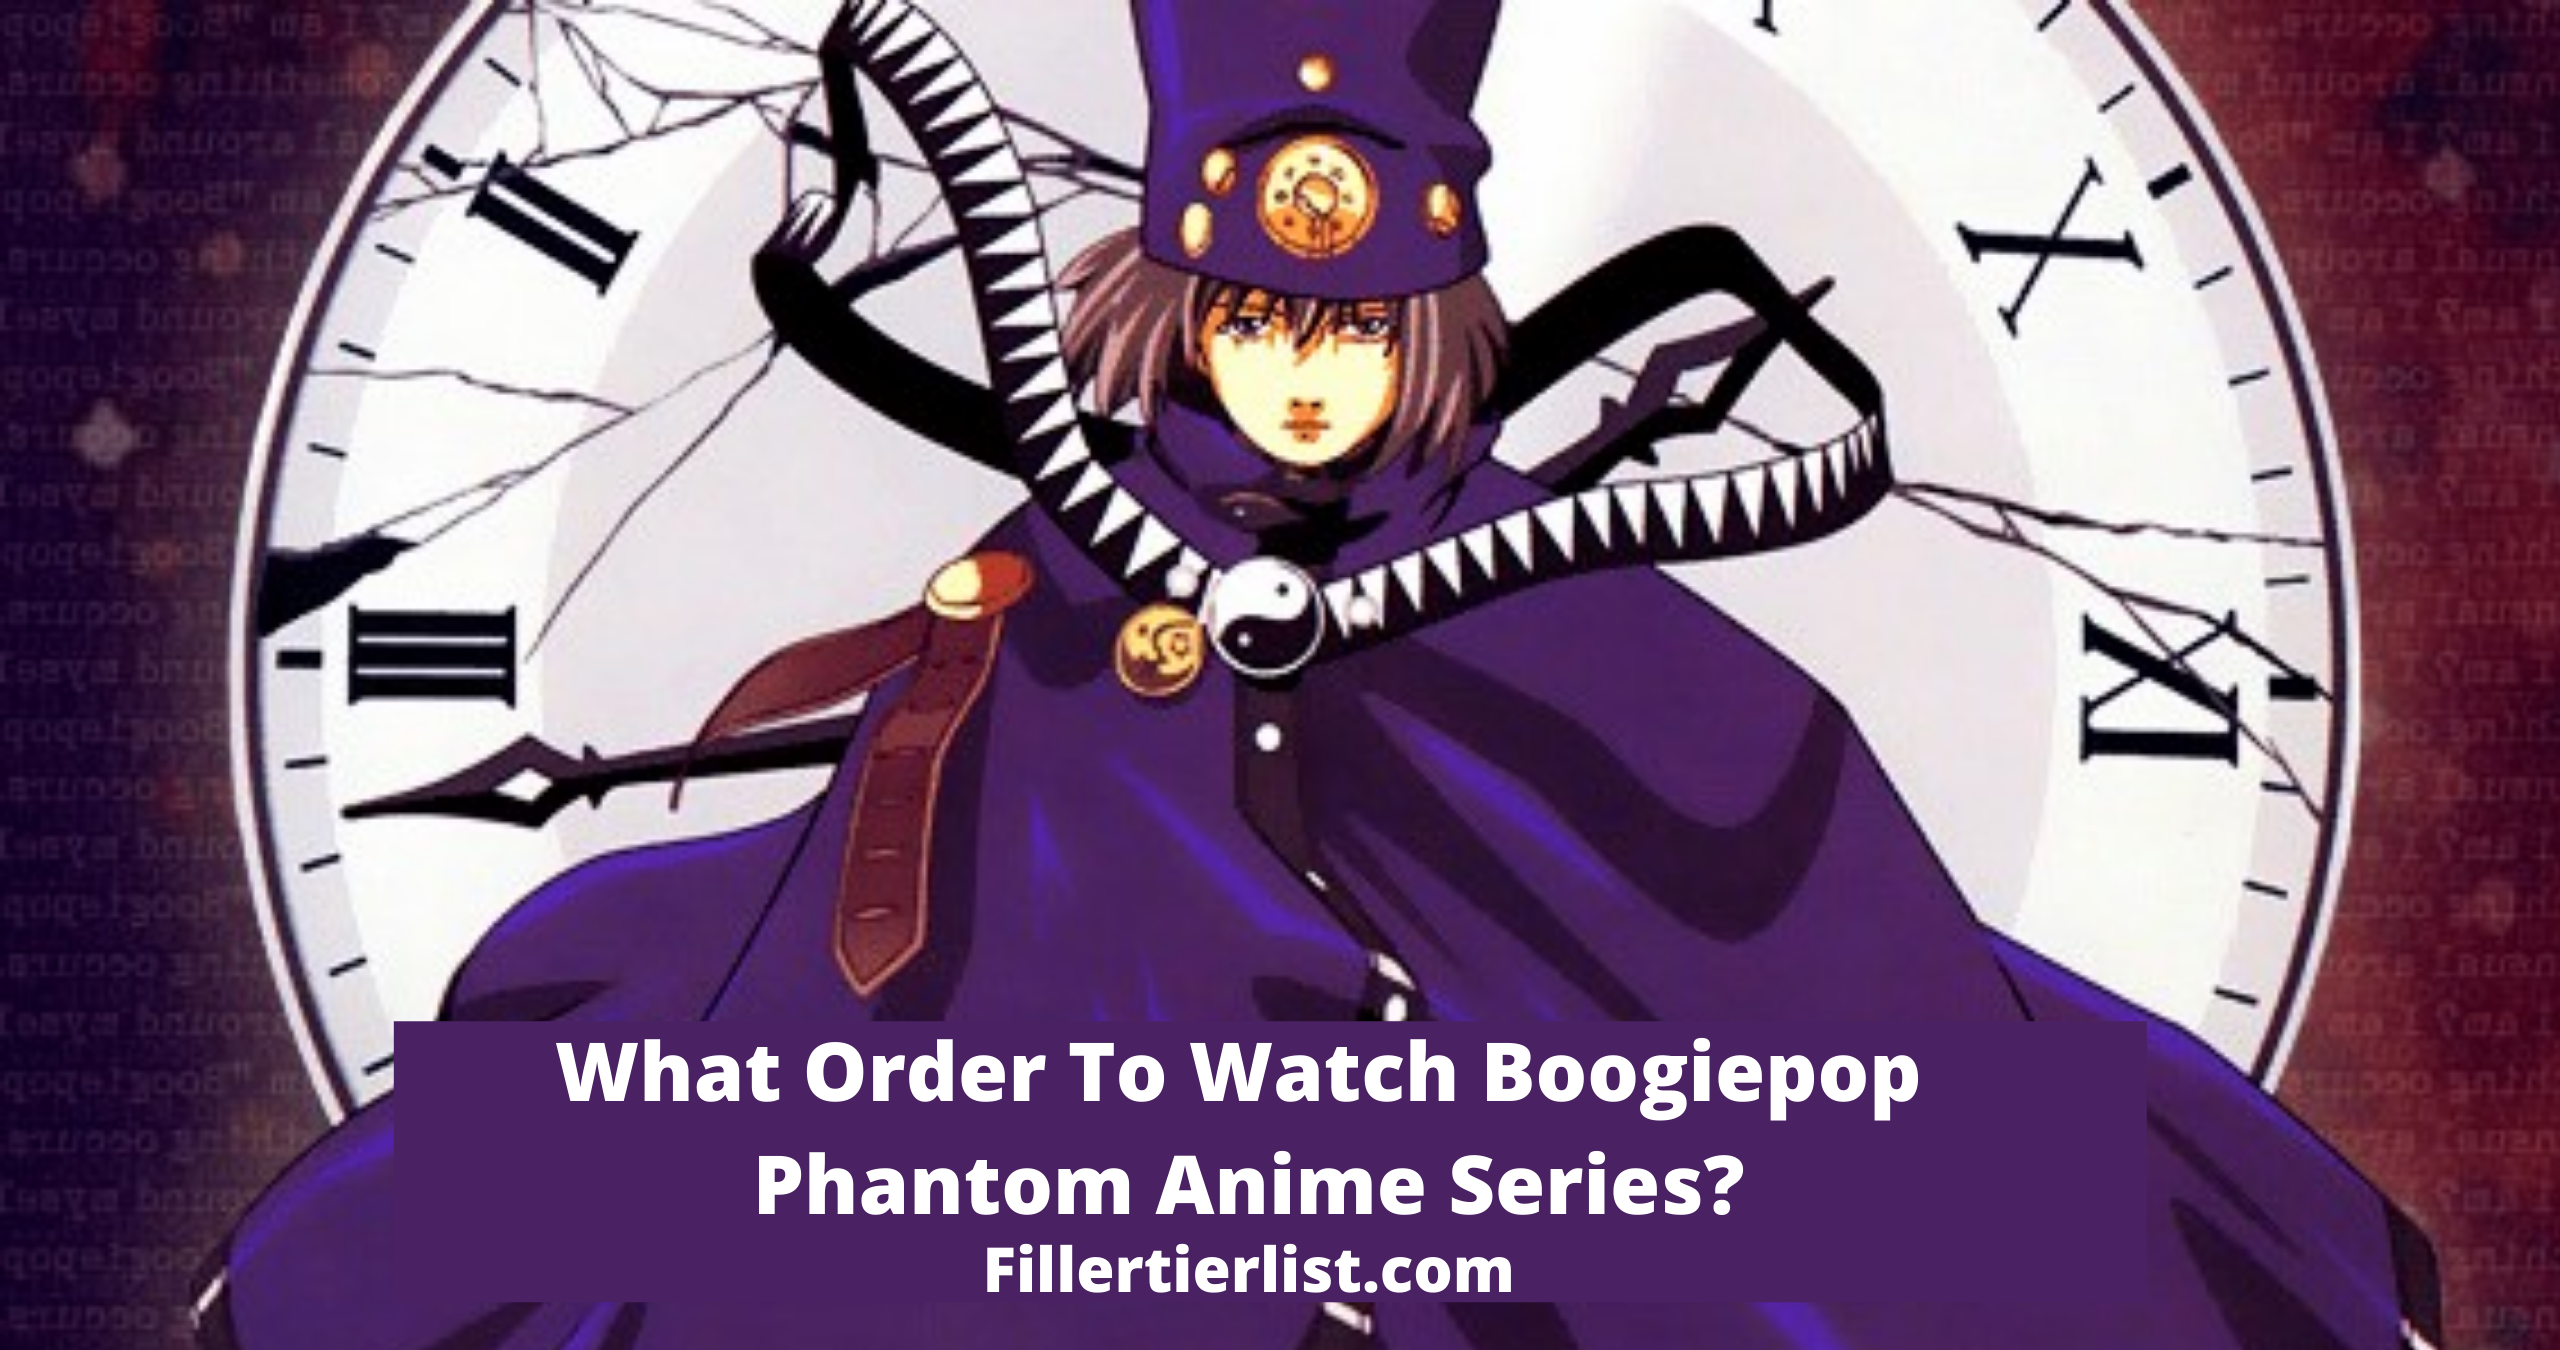 Boogiepop Phantom Anime Series Watch Order Guide 2021